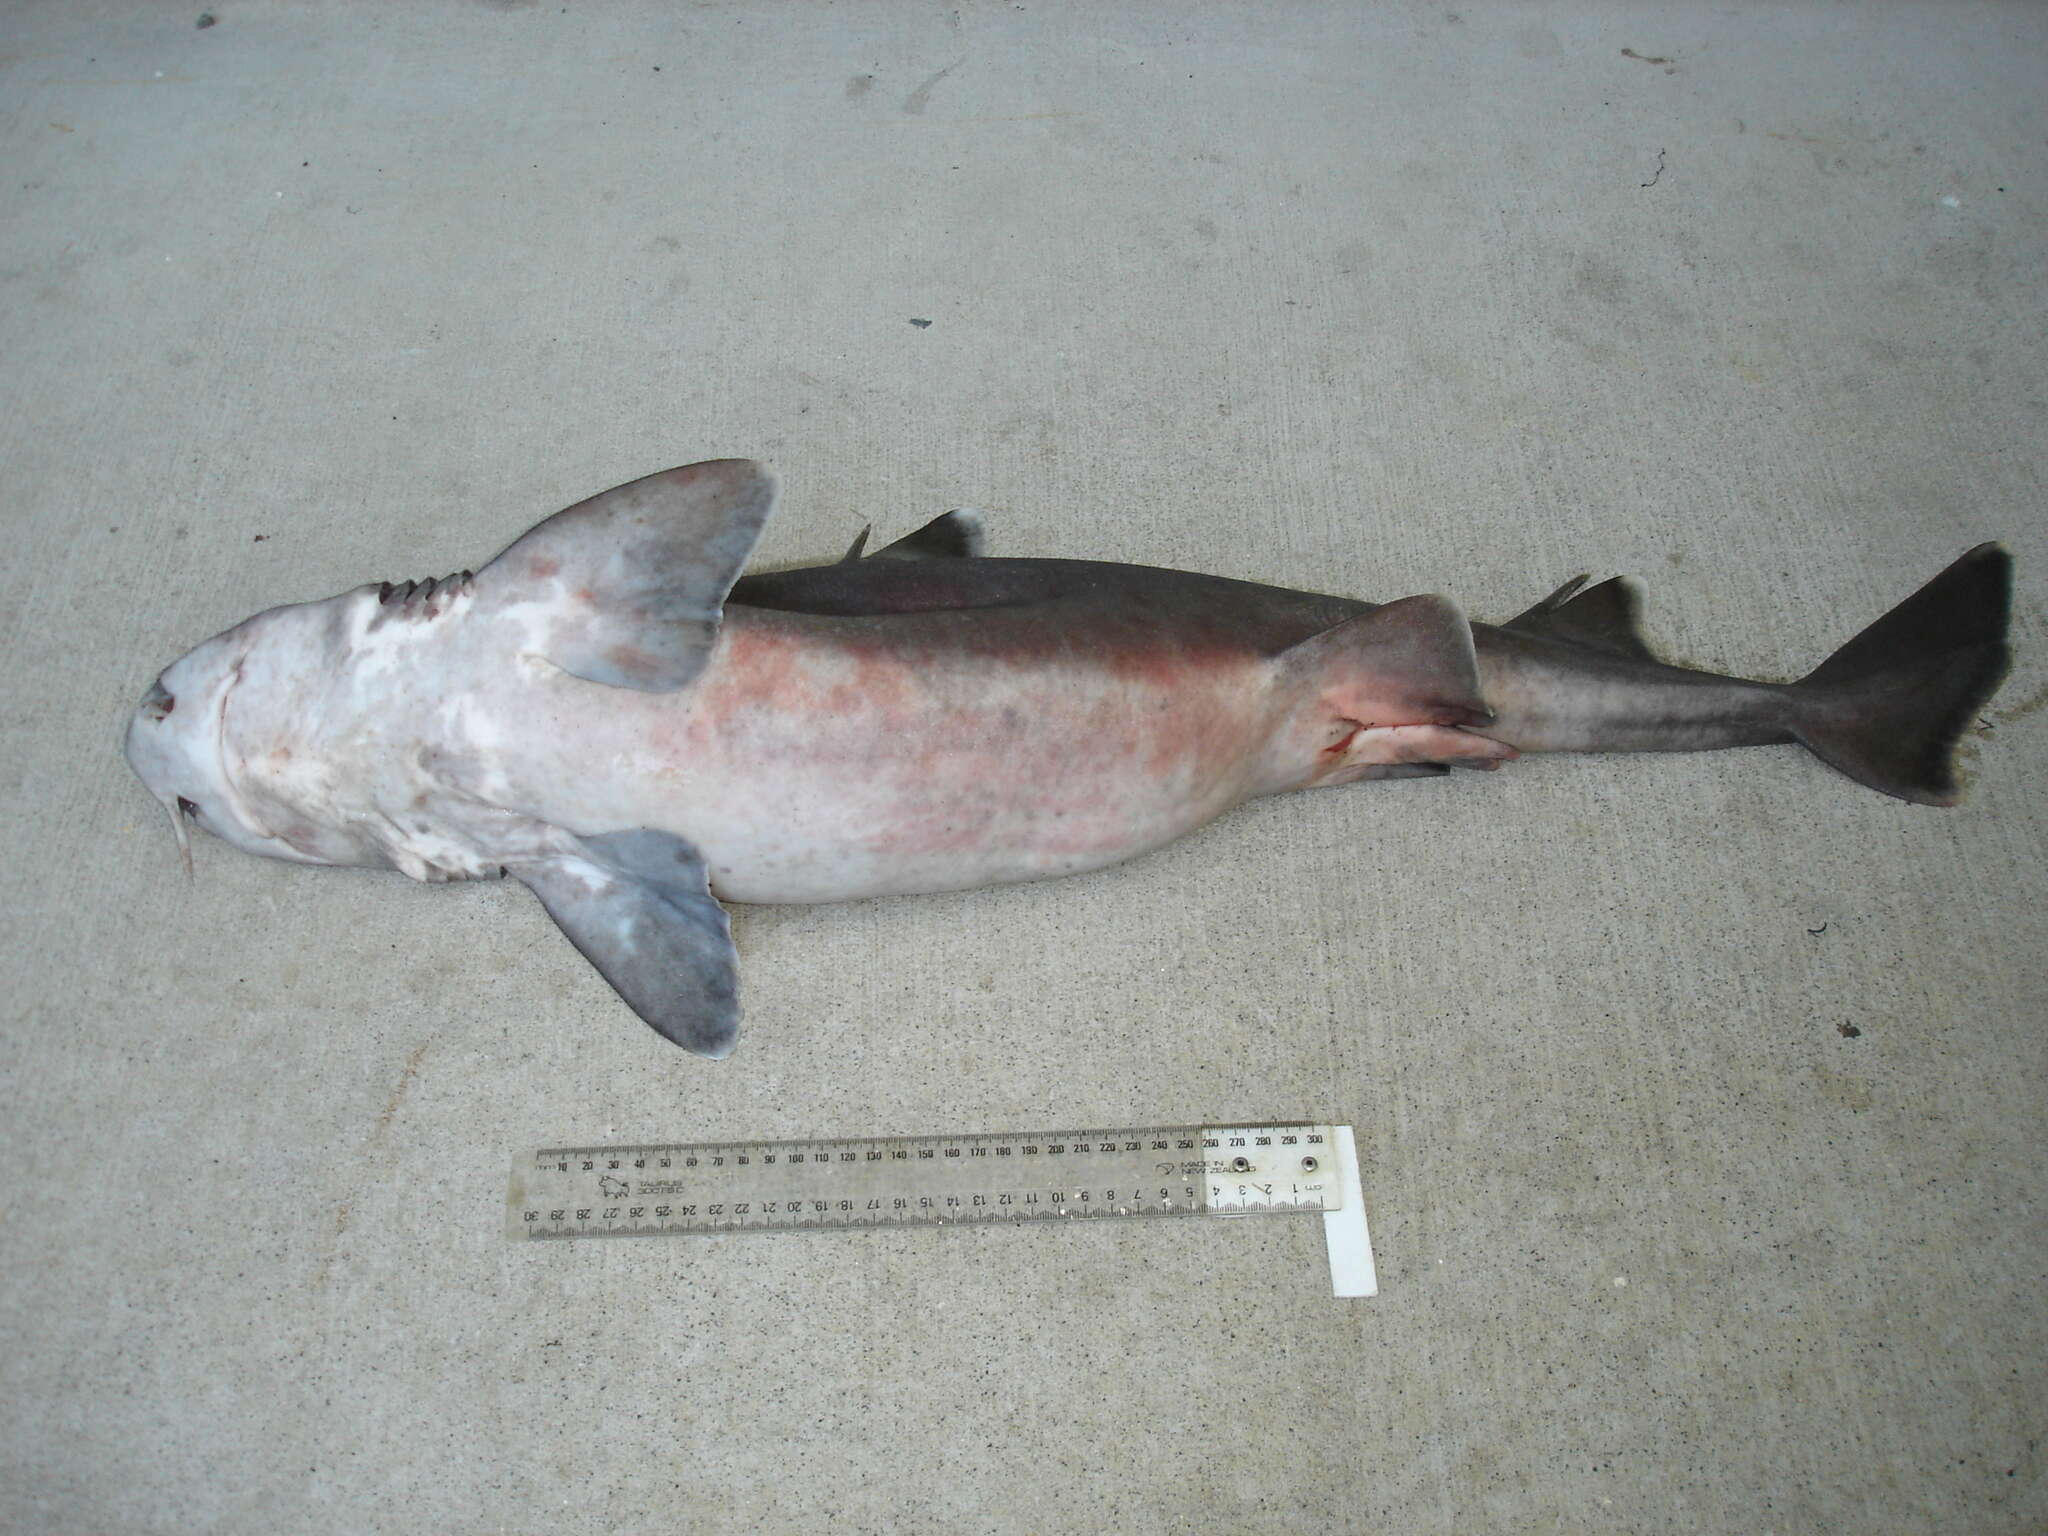 Image of Mandarin dogfish